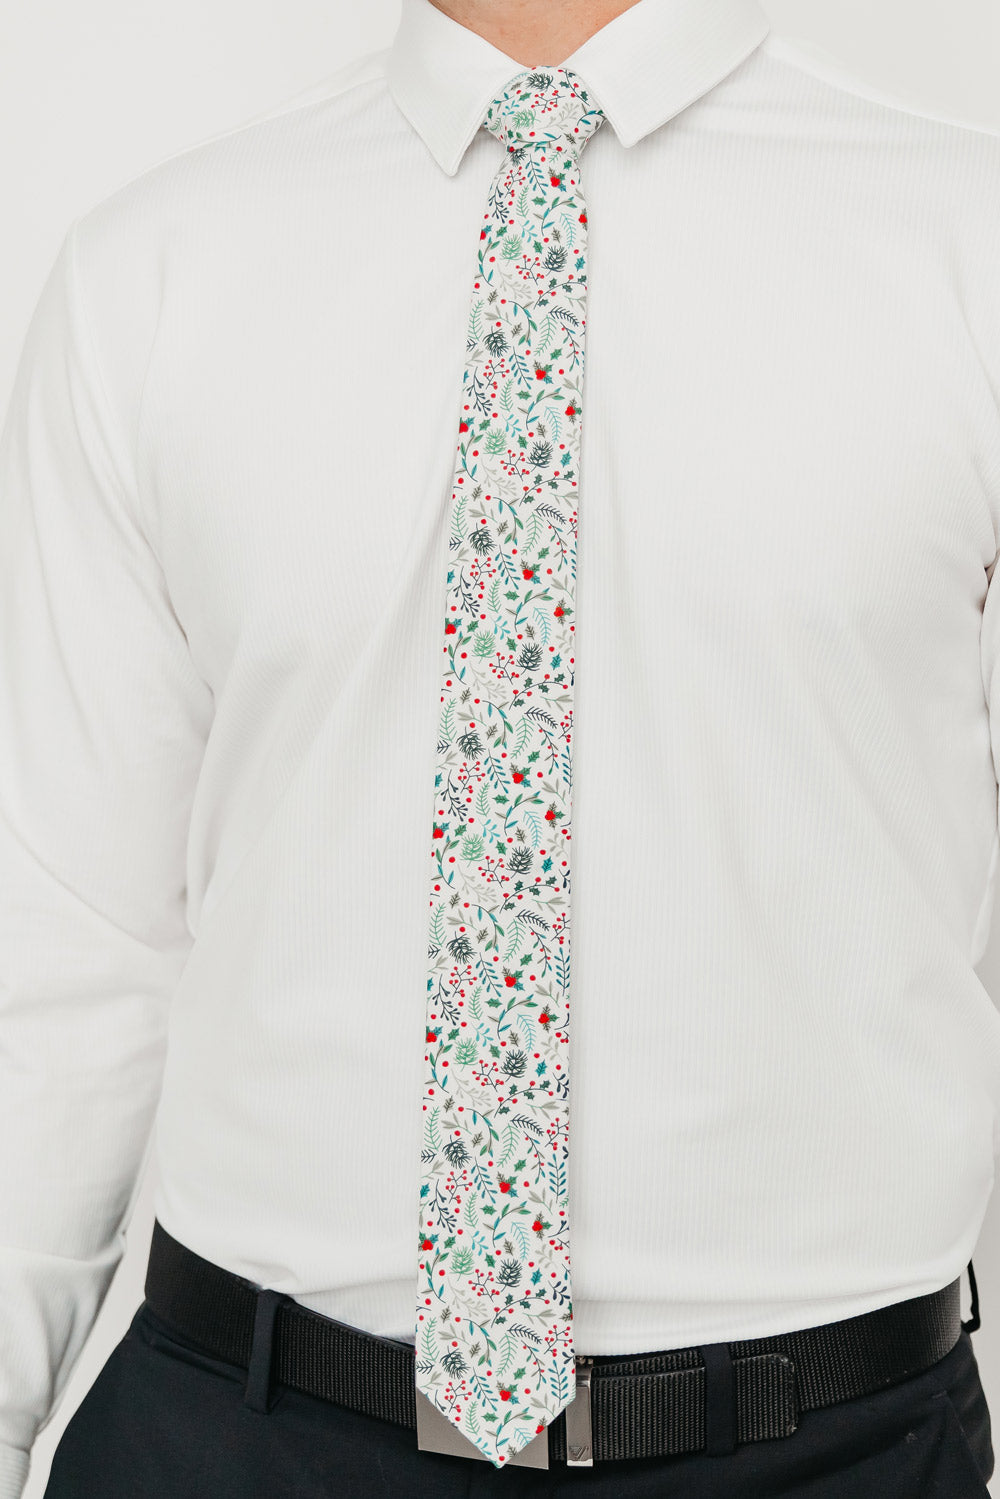 DAZI Mistletoe tie worn with a white shirt, black belt and black suit pants.